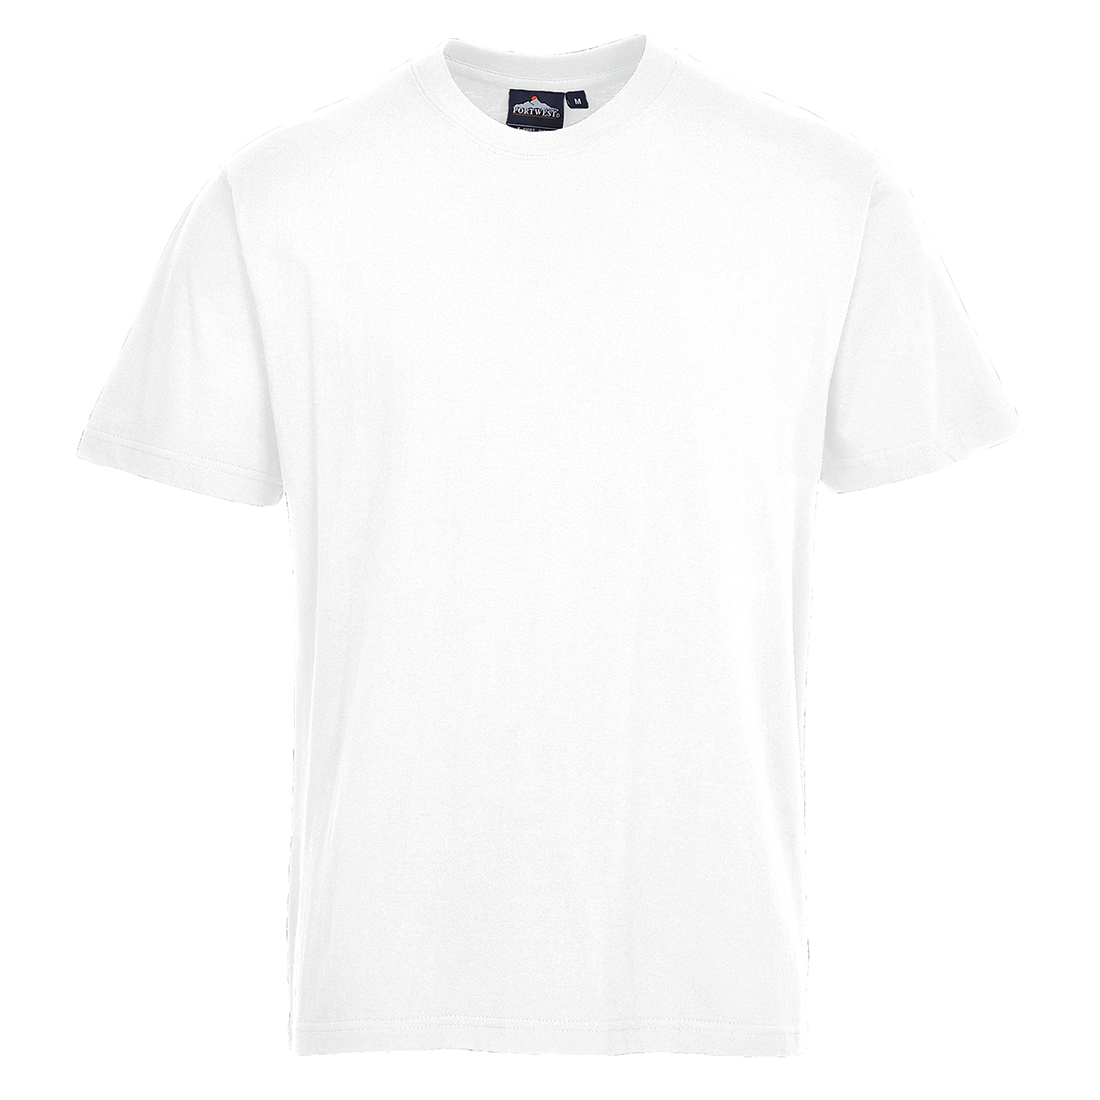 Turin Premium T-Shirt - White